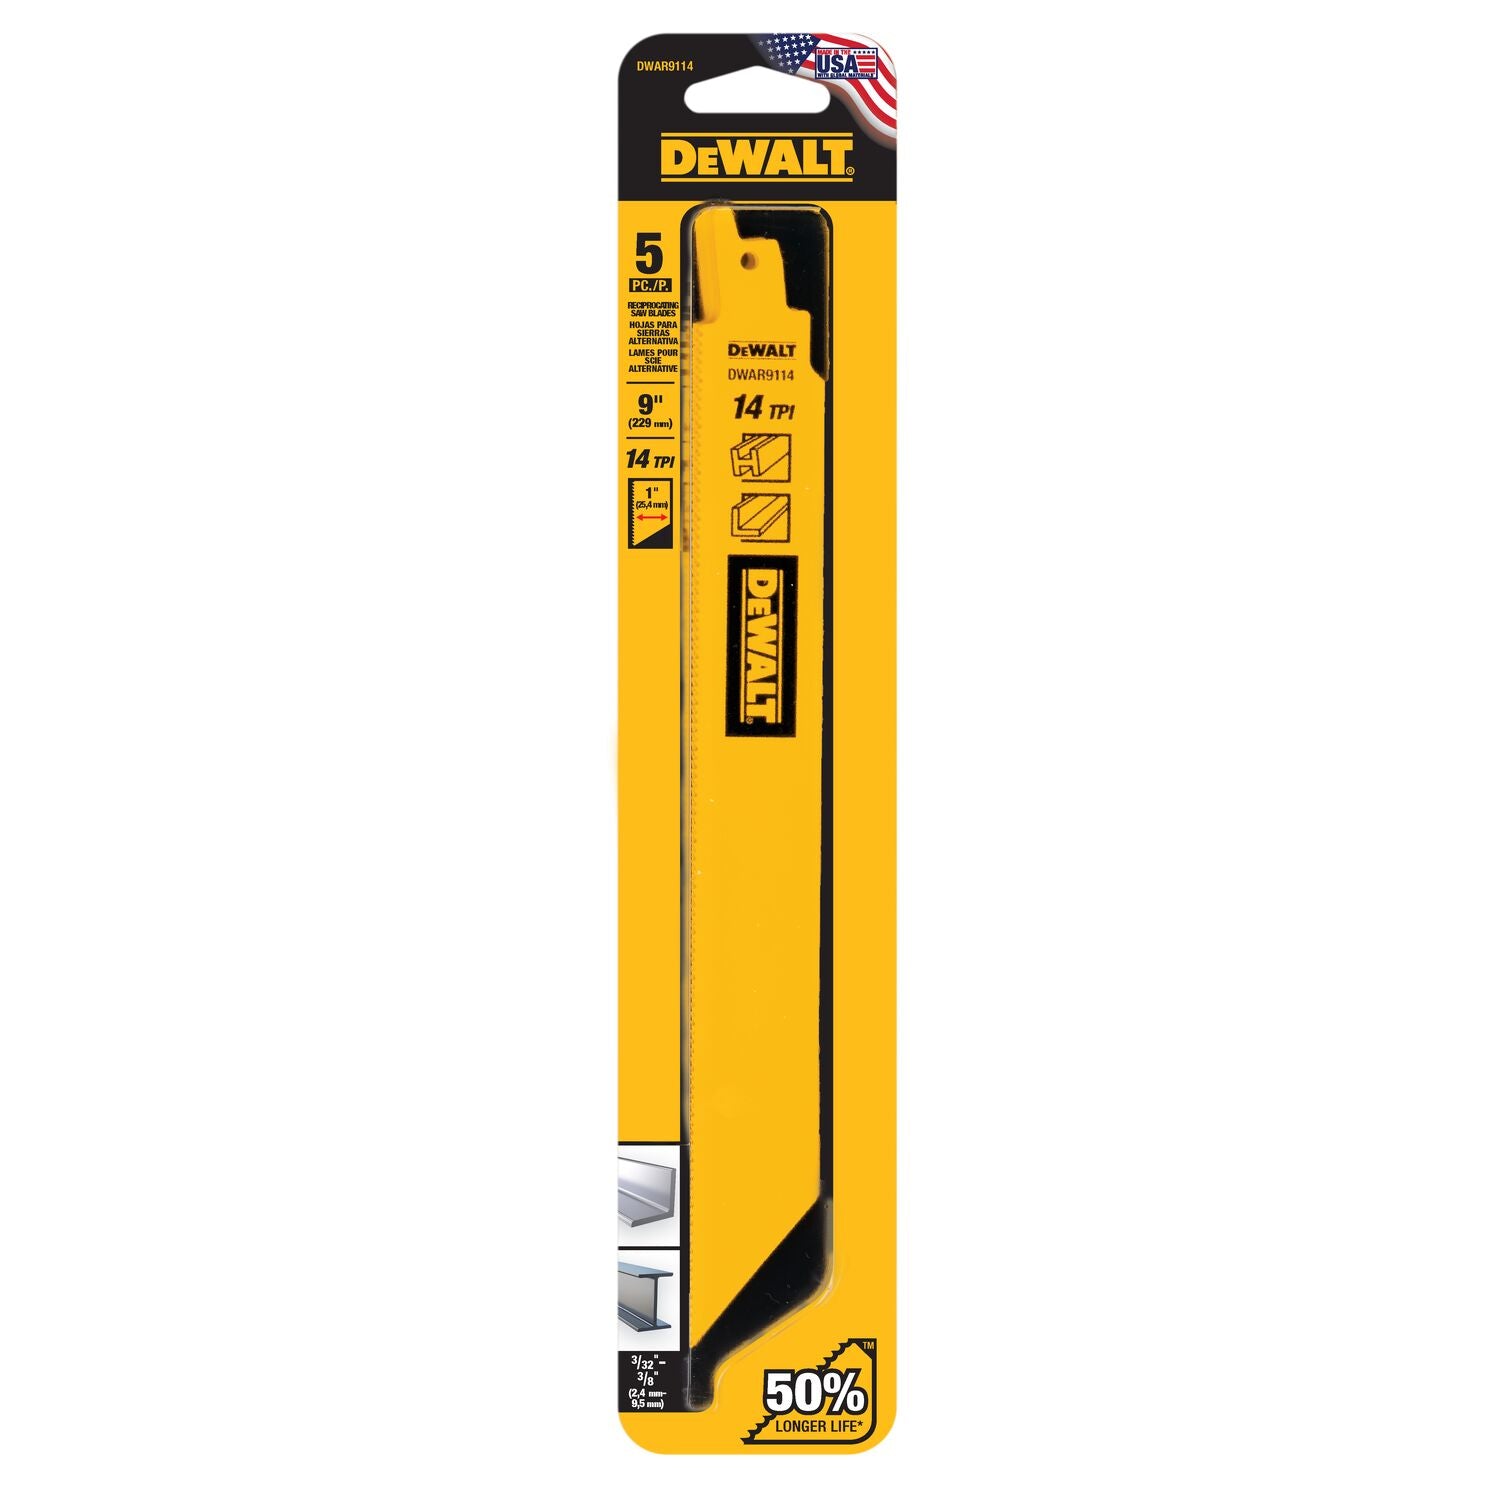 DEWALT DWAR9114 - 5-Pack 9-in 14-TPI Metal Cutting Reciprocating Saw Blade